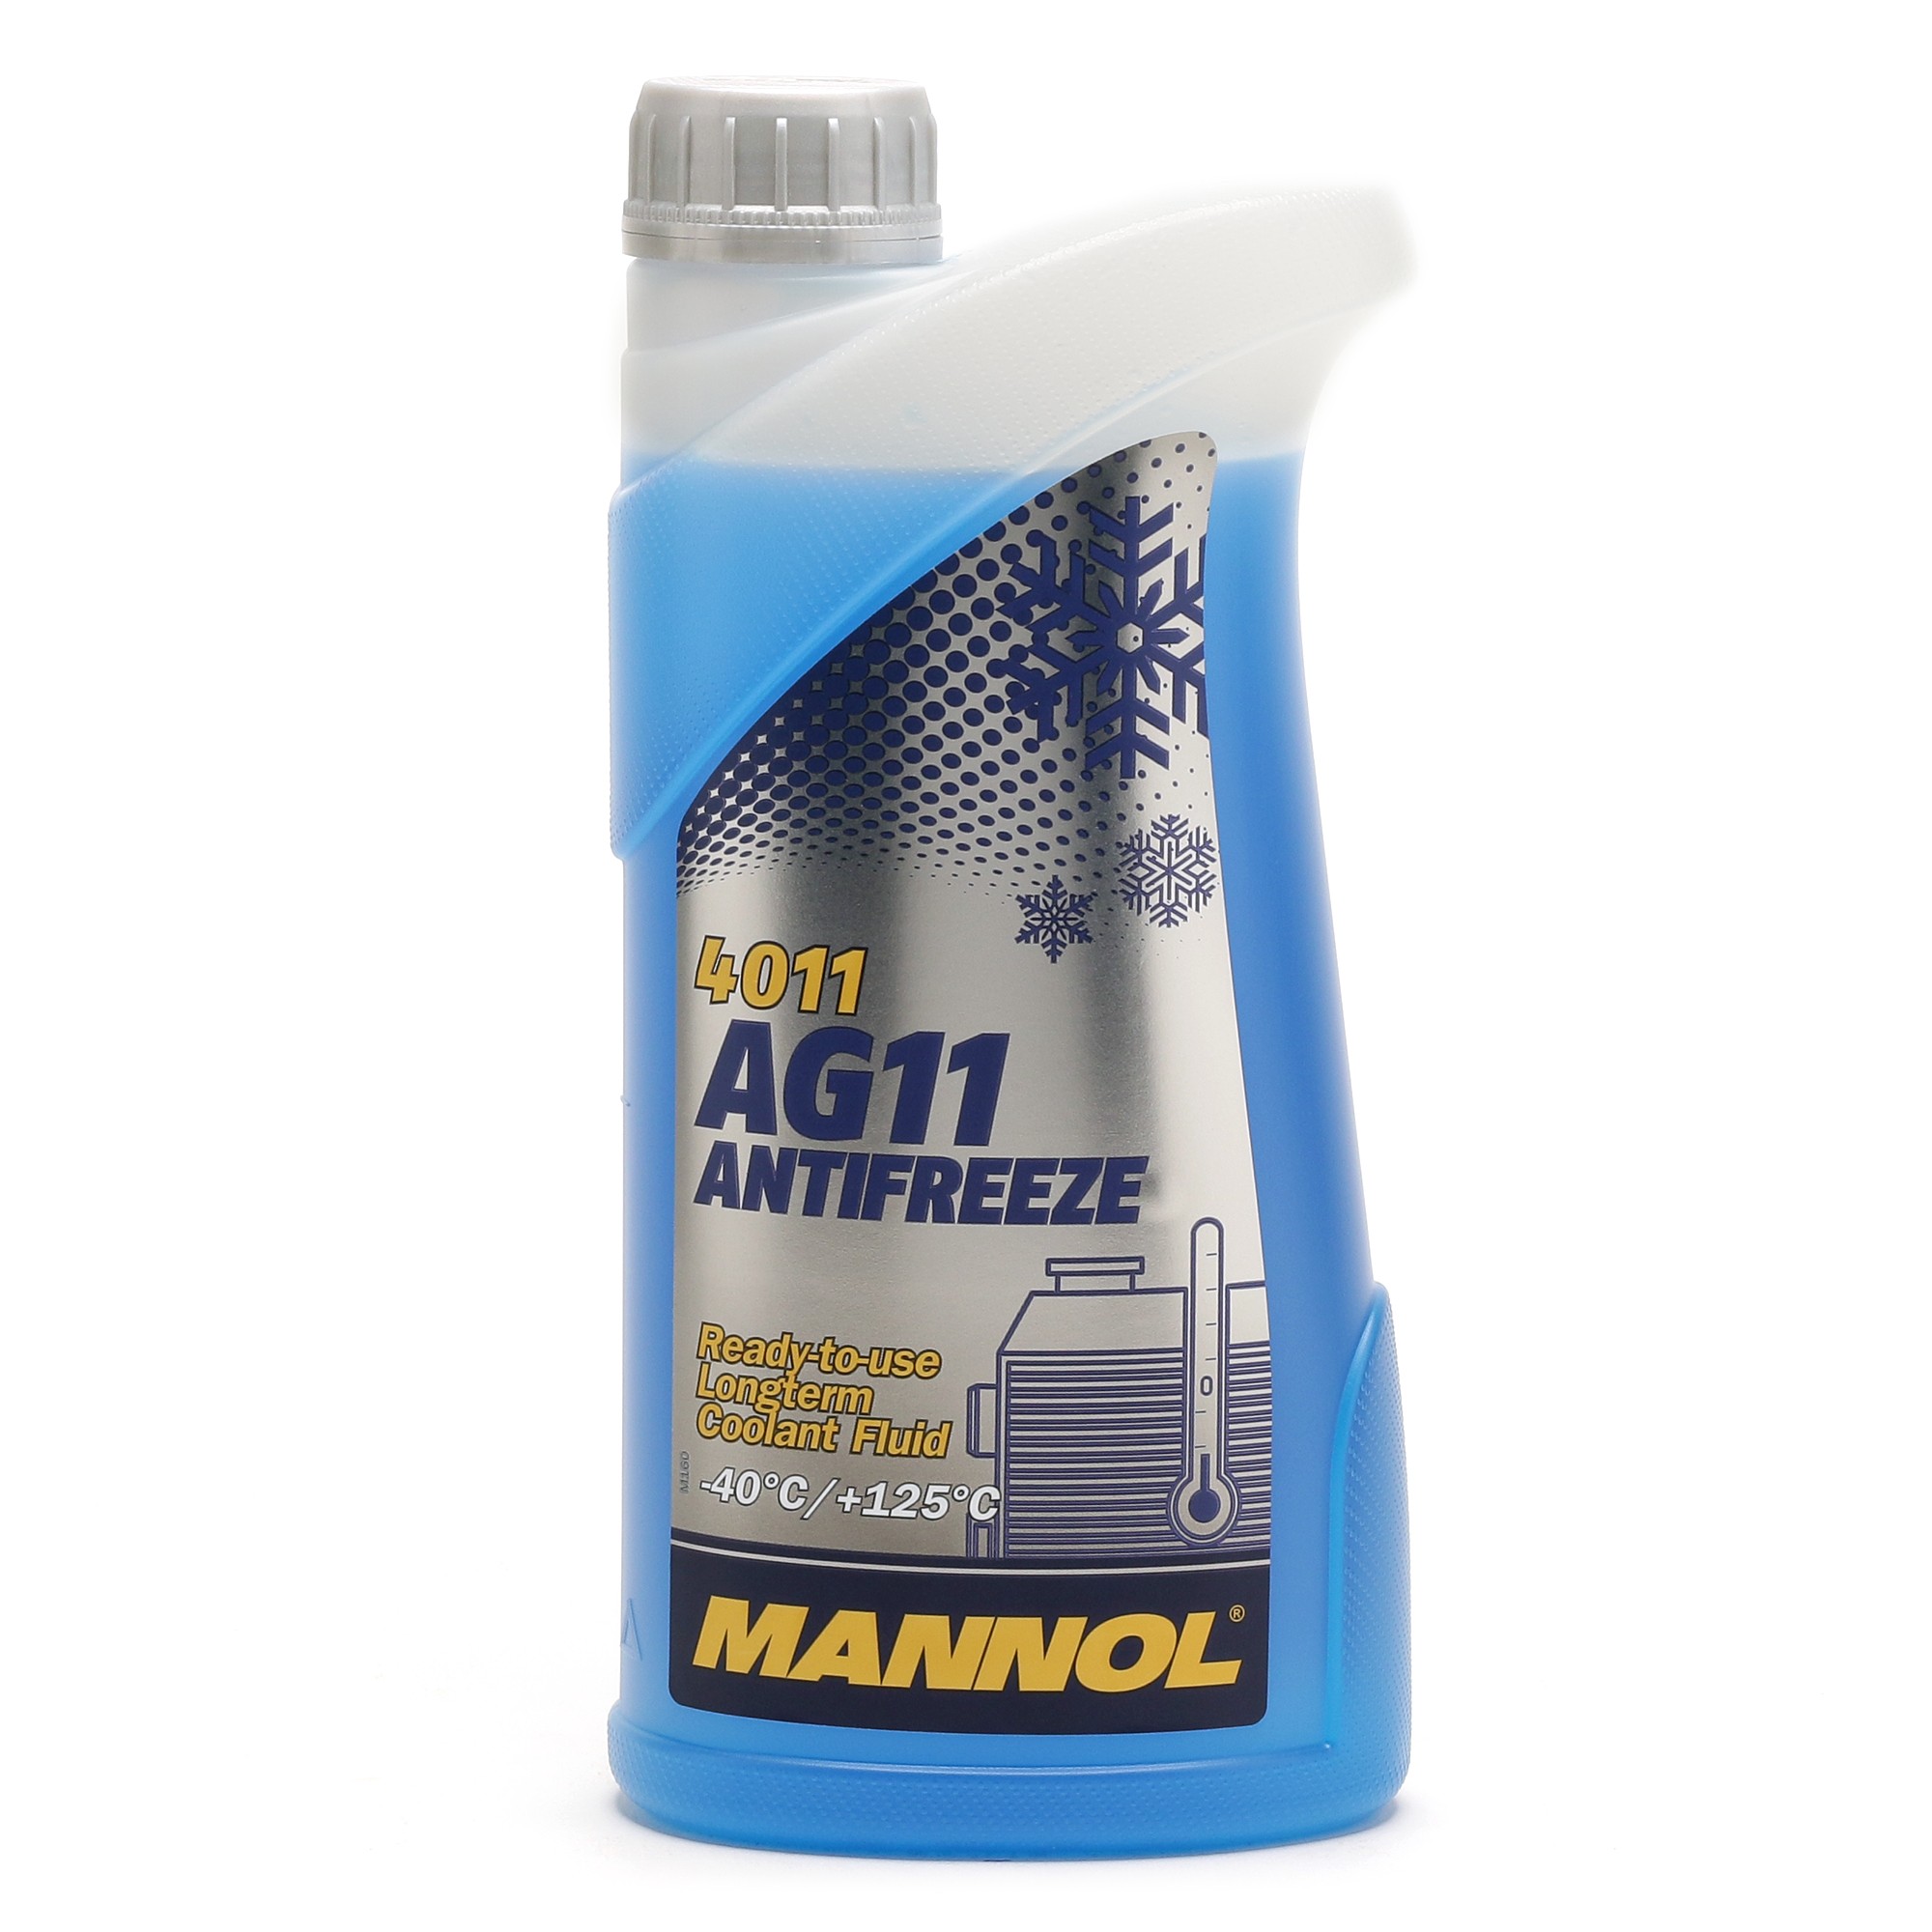 Mannol 4011 Kühlerfrostschutz Antifreeze AG11 Longterm -40 Fertigmischung 1 Liter